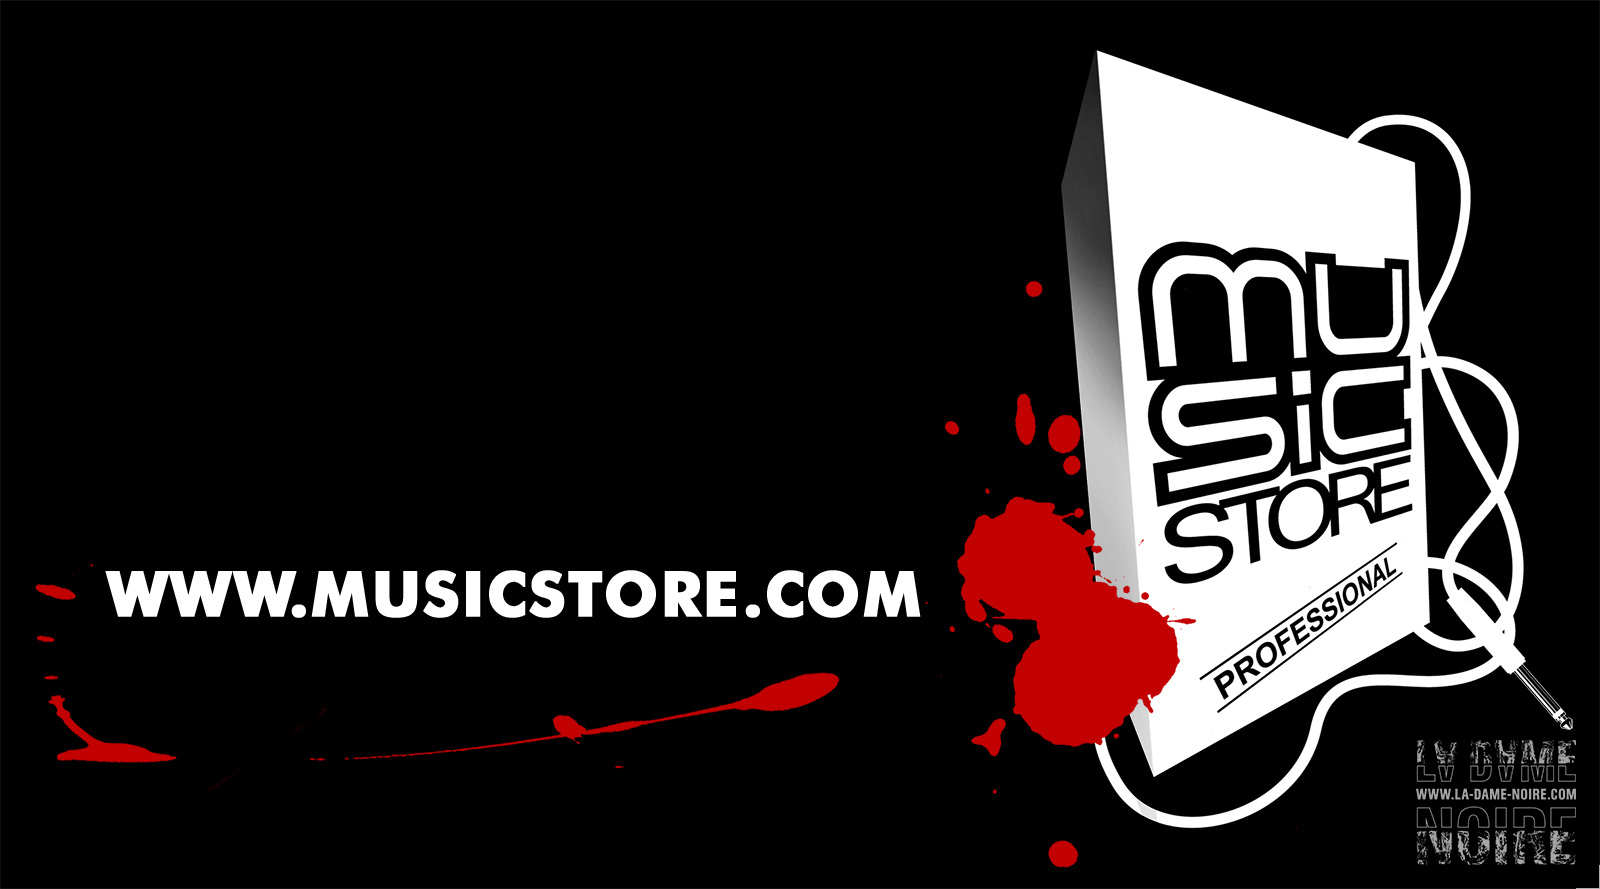 Re-make of Musicstore's logo for sticker